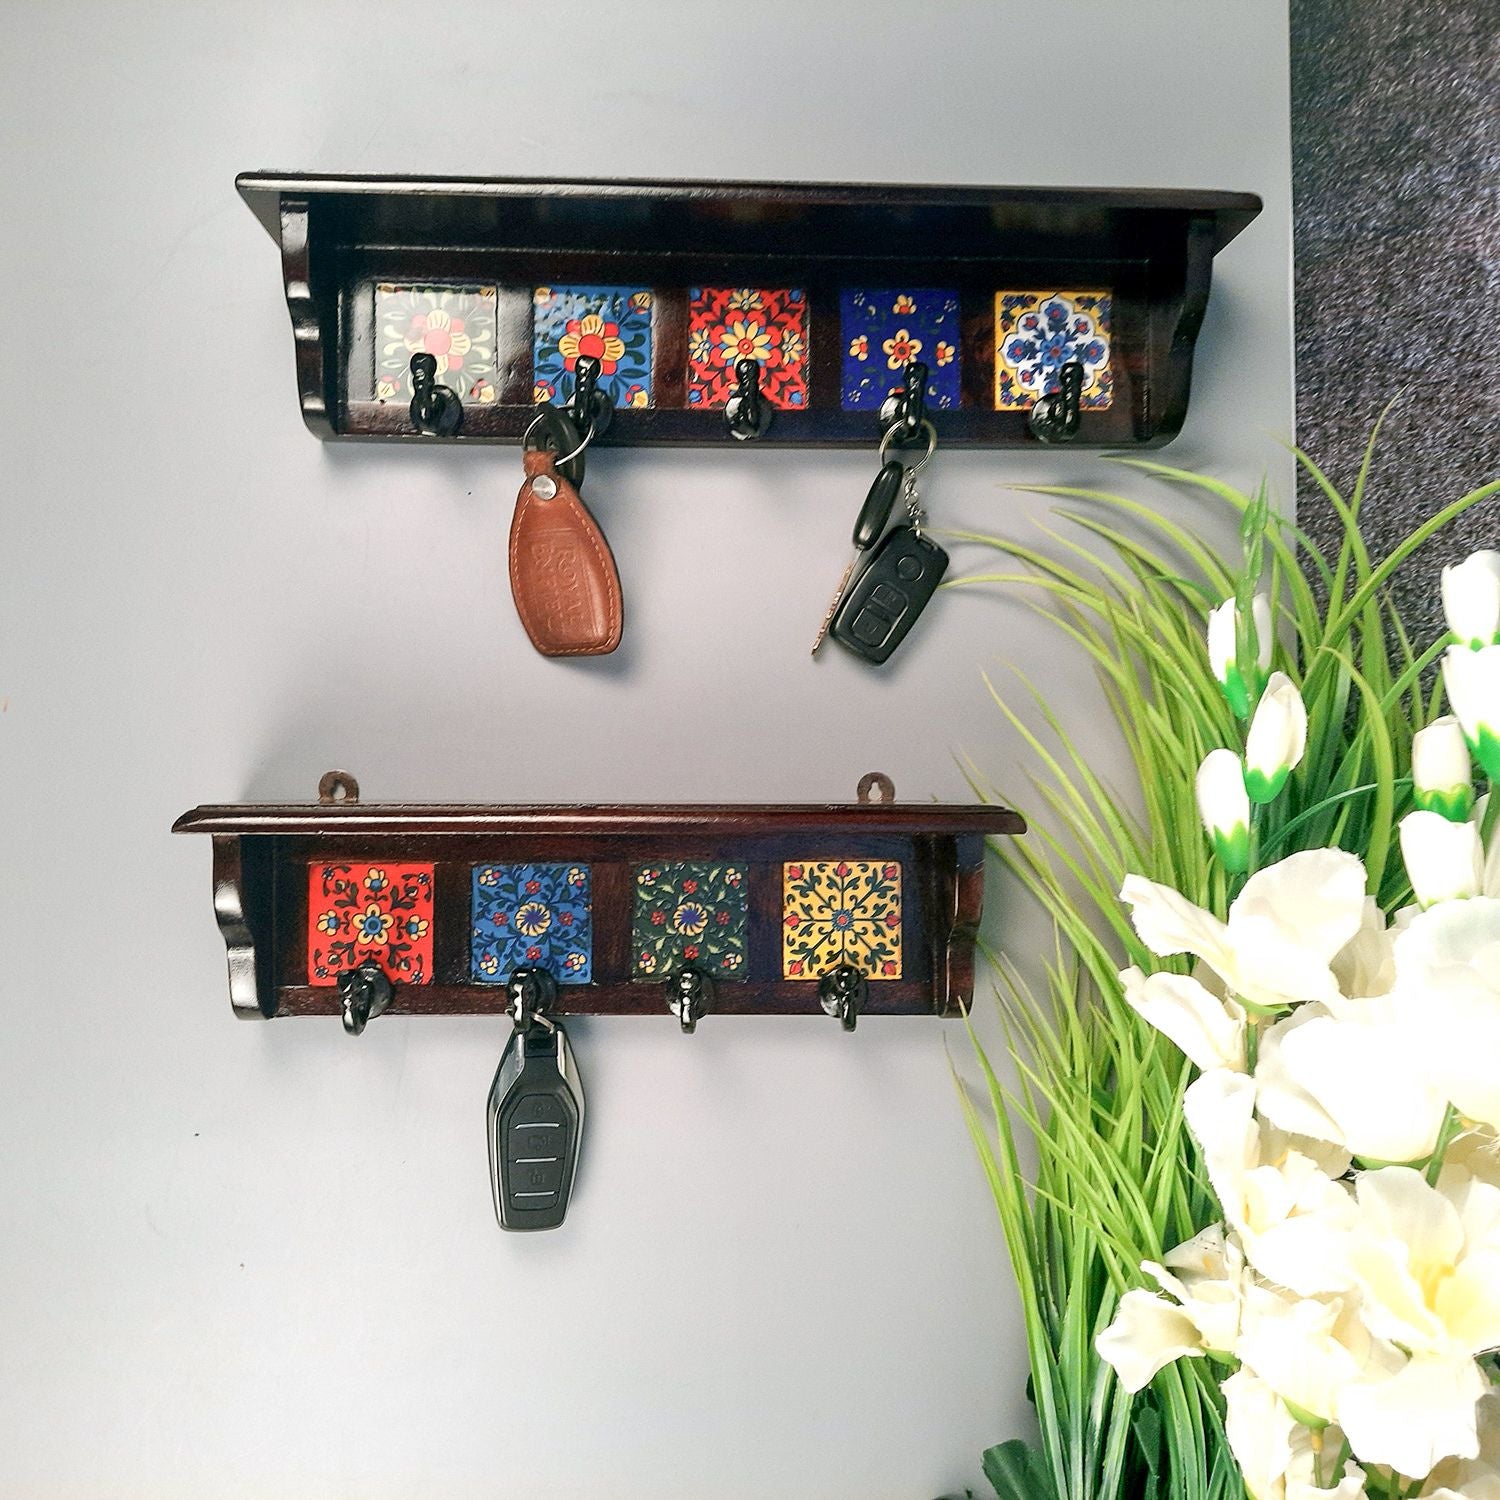 Wooden Shelf With Wall Key Hooks - Wall Mount | Floating Shelves For Decorating Showpieces, Vases, Candle Holders & Books | Key Holder Organiser - Home, Entrance, Office Decor & Gifts - Set of 2 - Apkamart